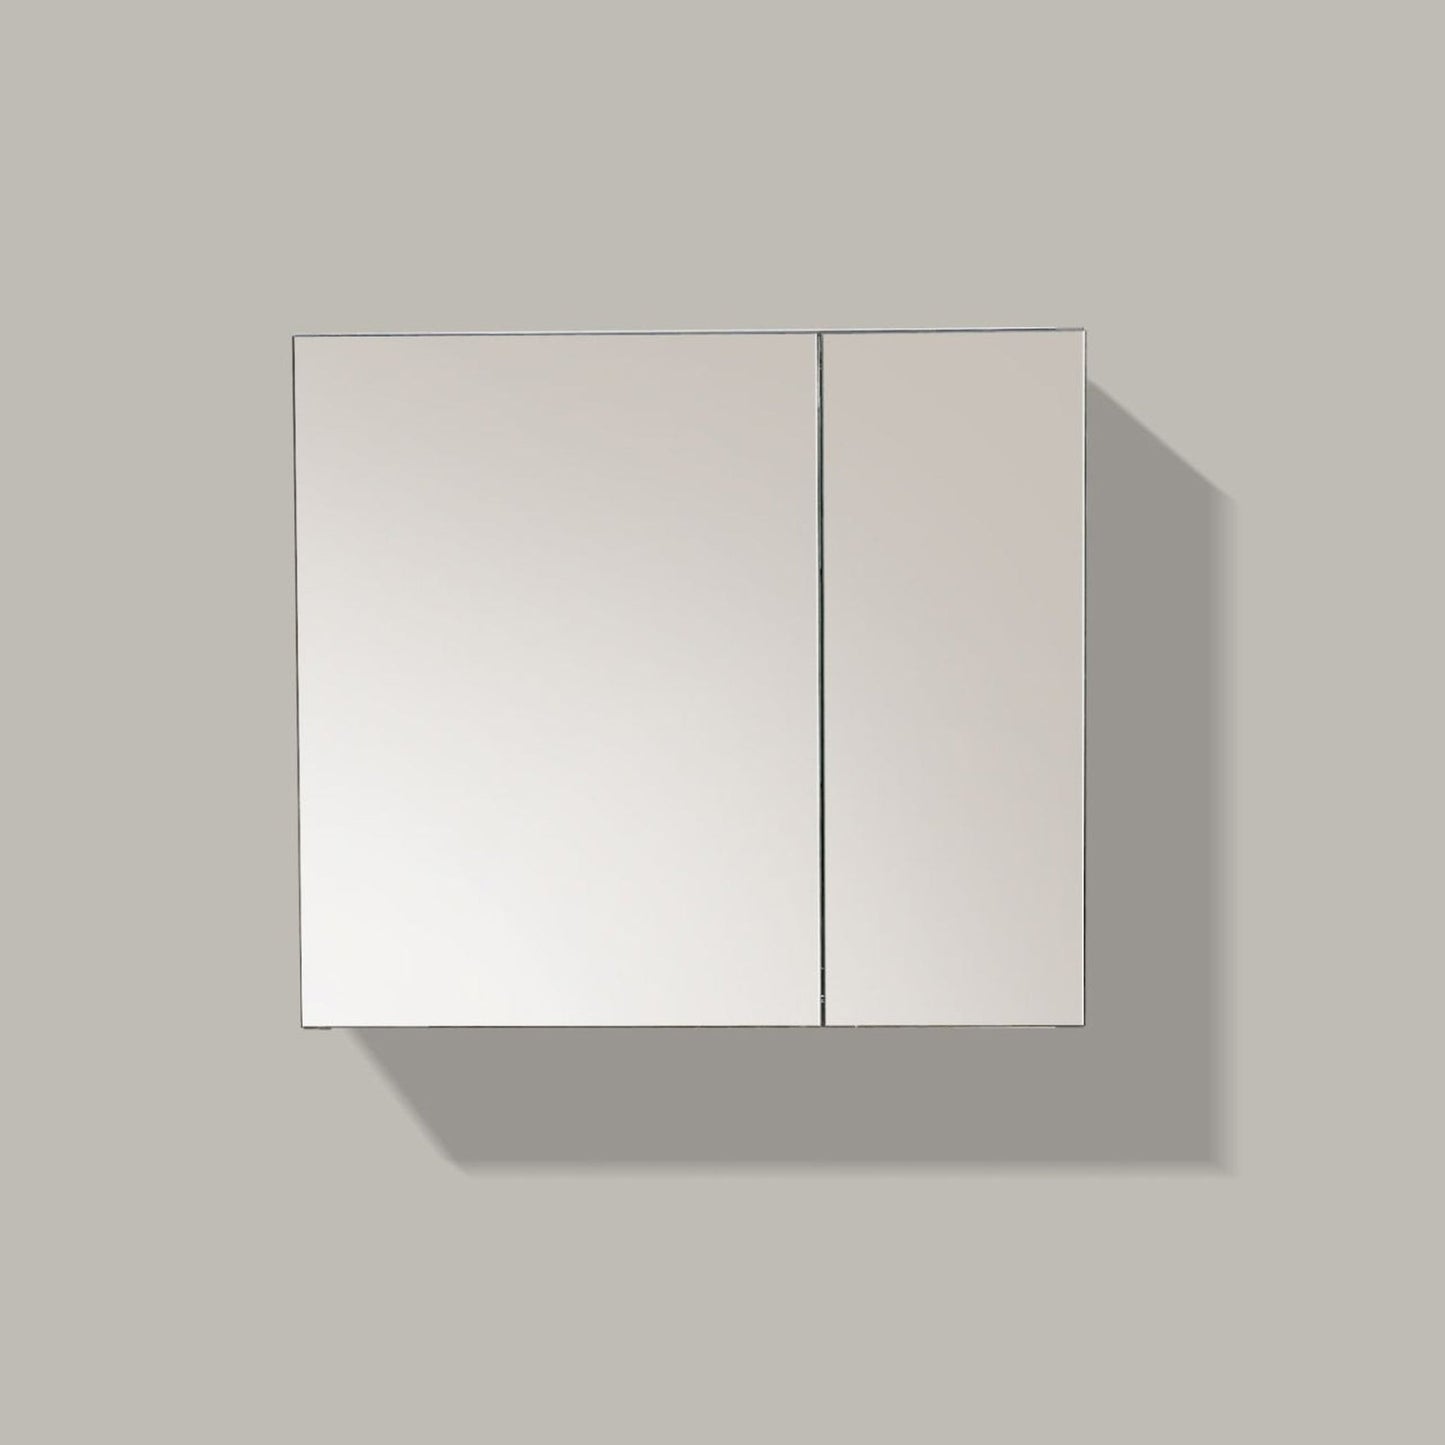 KubeBath Kube Medicine Cabinets 30" x 26" With Mirror For Bathroom